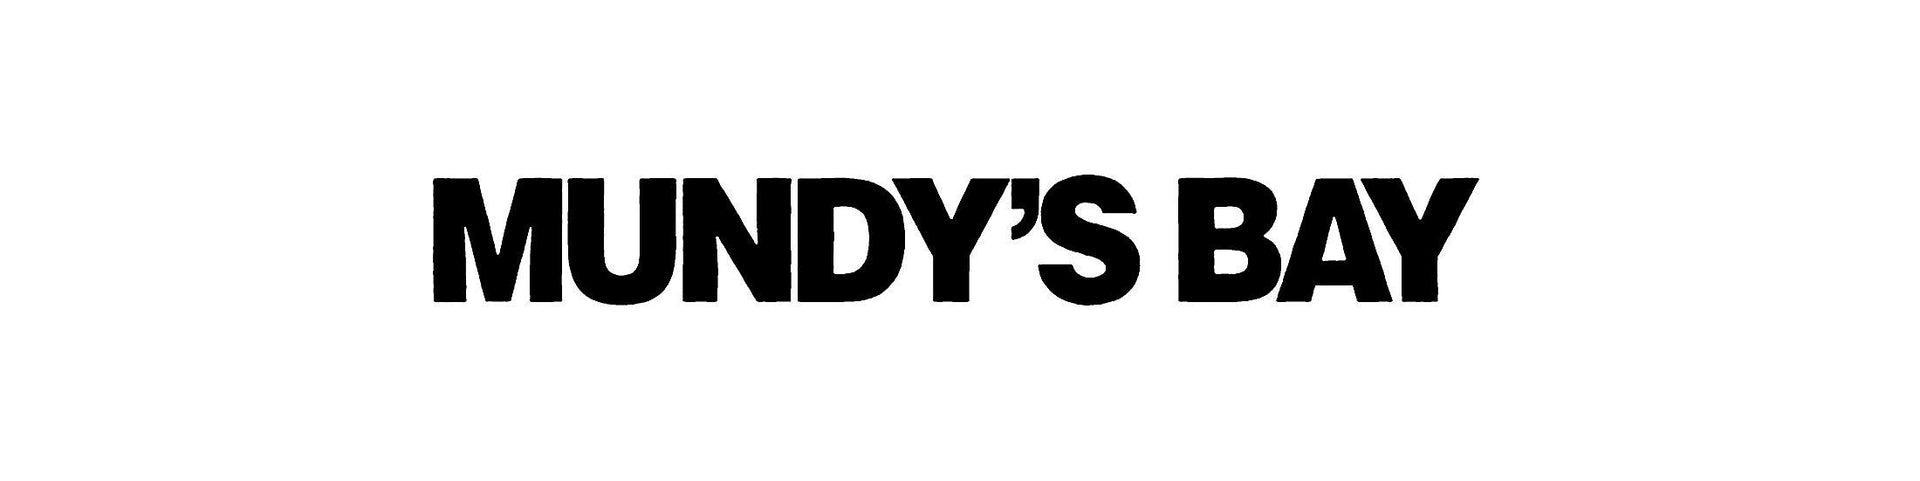 Shop – Mundy's Bay – Band & Music Merch – Cold Cuts Merch